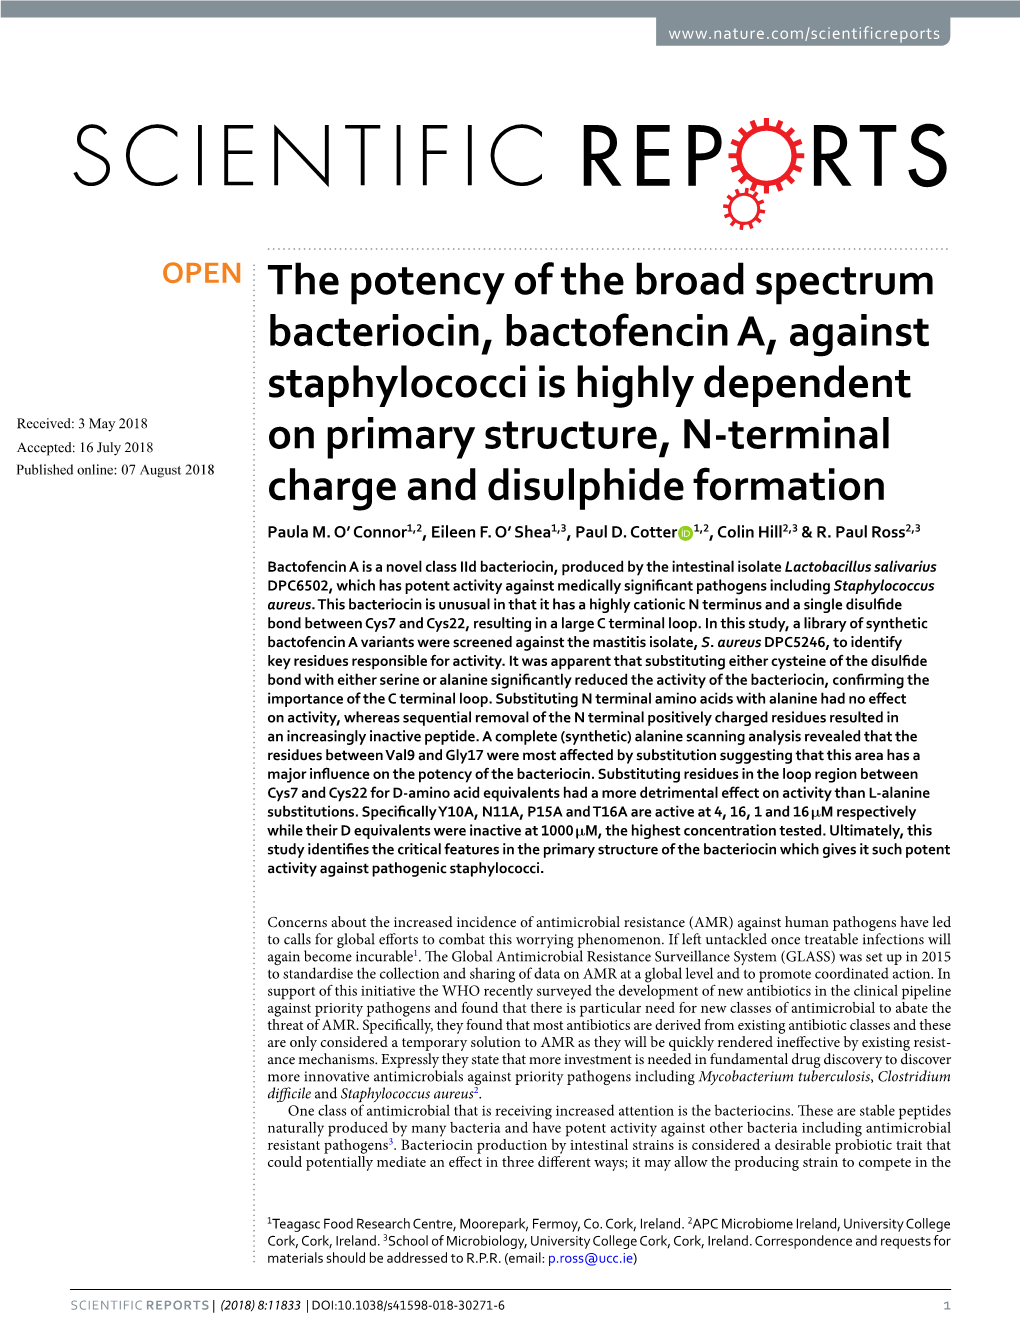 The Potency of the Broad Spectrum Bacteriocin, Bactofencin A